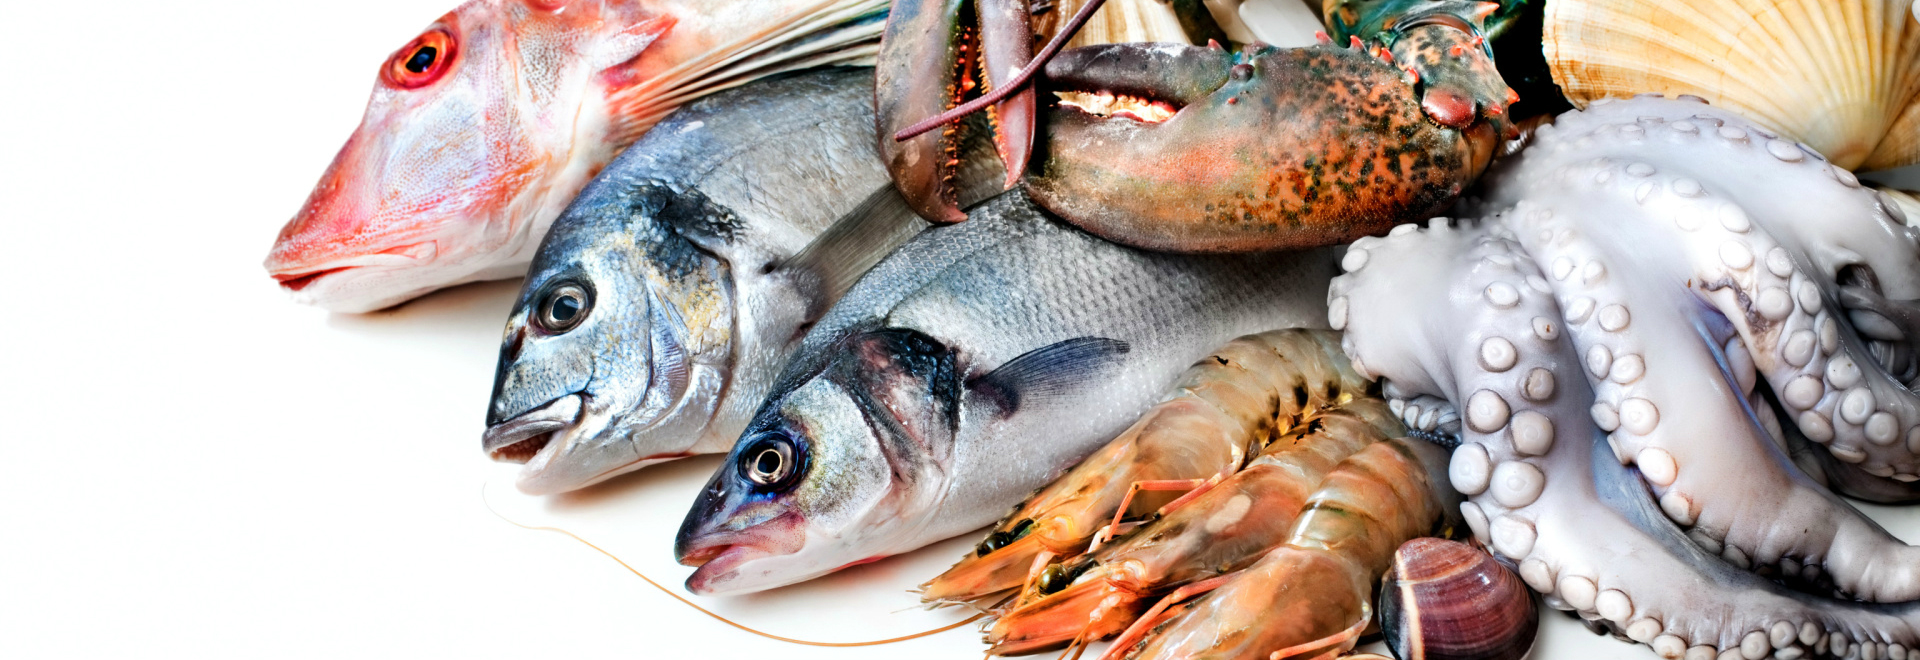 10 restaurantes de peixe em Lisboa